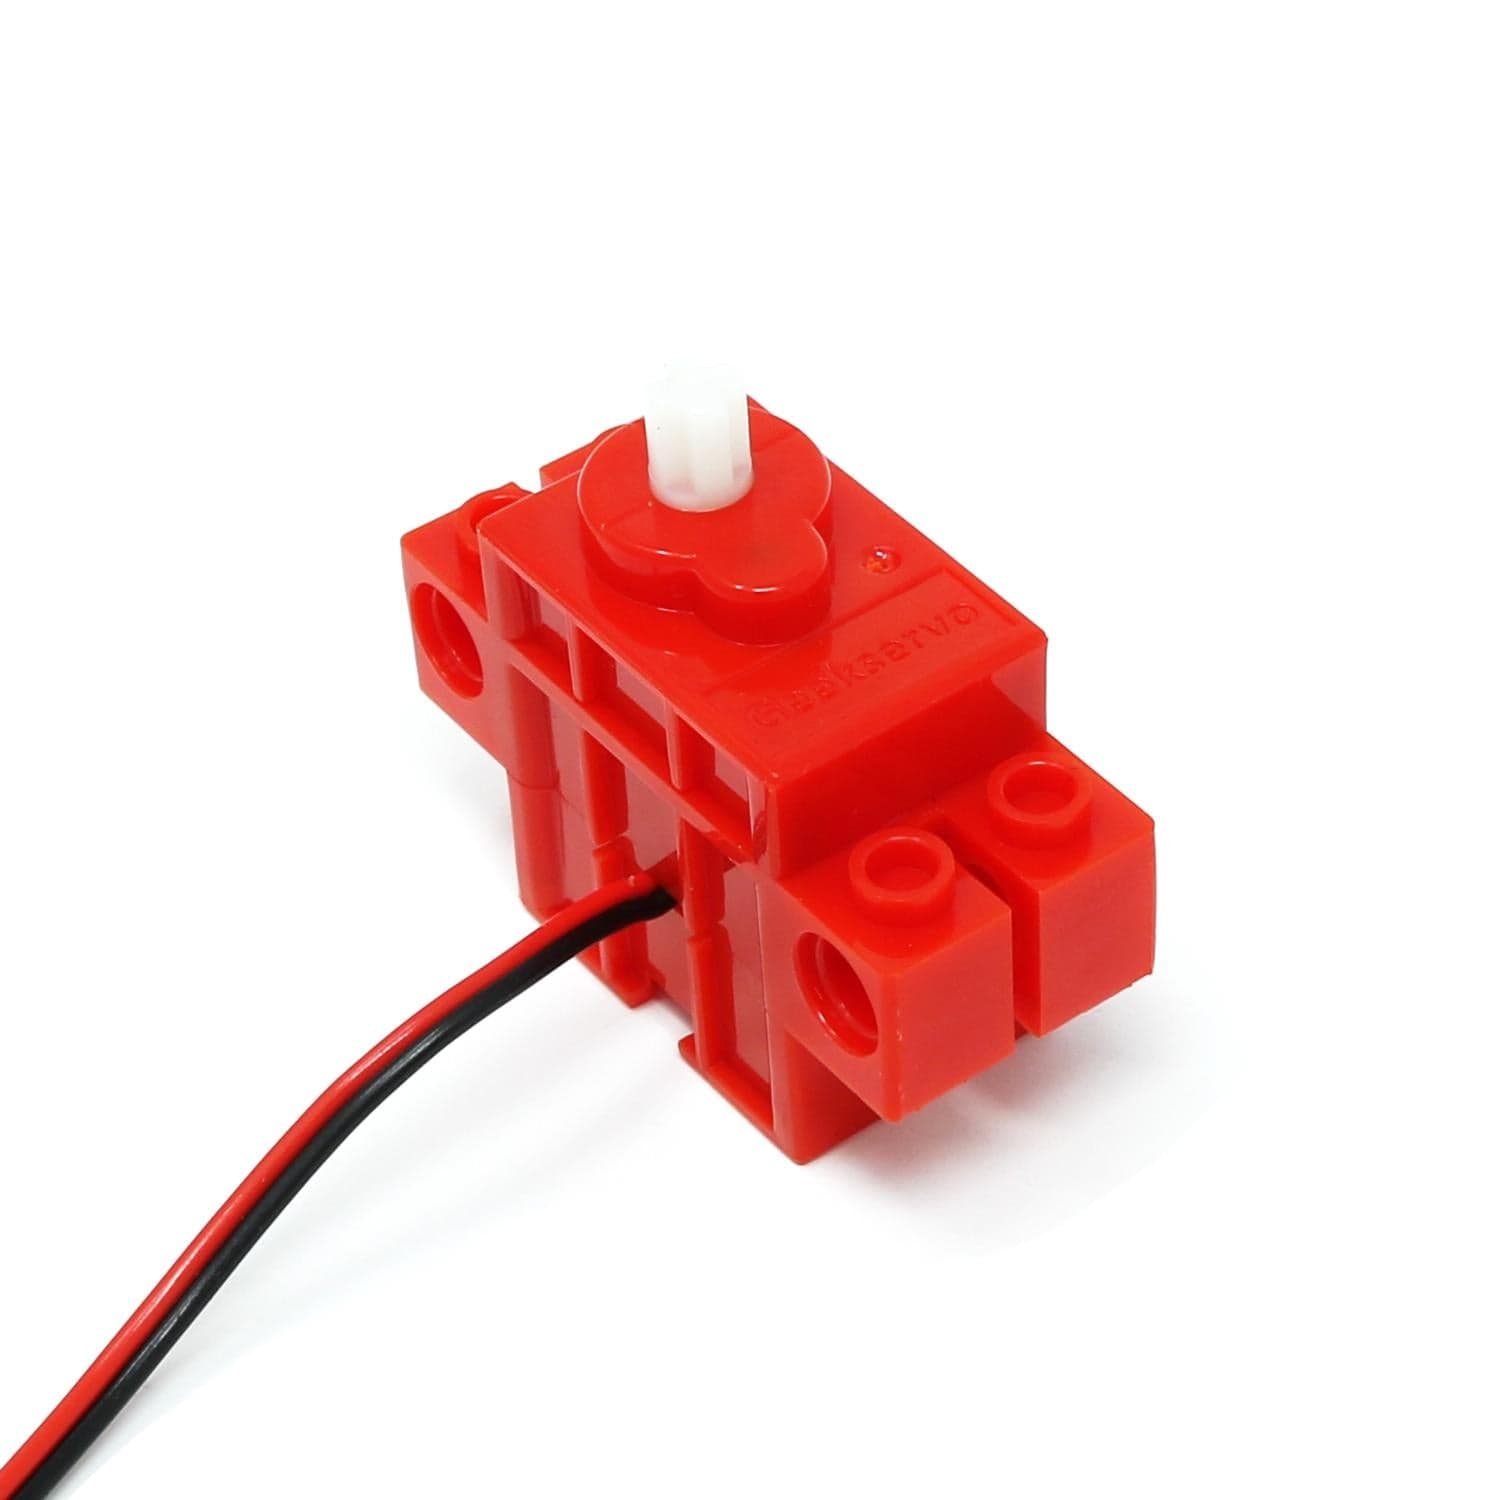 GeekServo LEGO-Compatible Motor - The Pi Hut